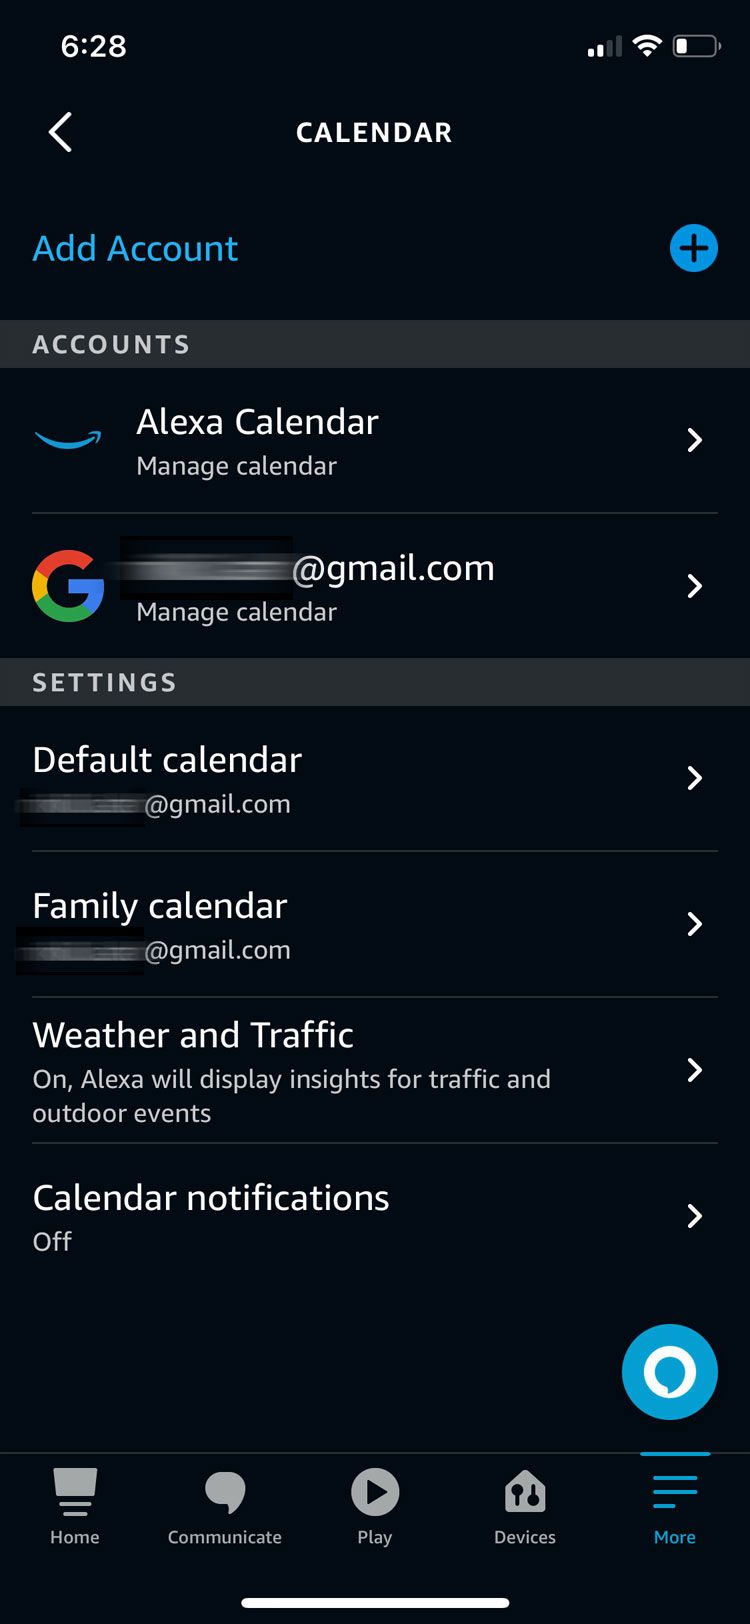 Amazon Alexa calendar accounts and settings